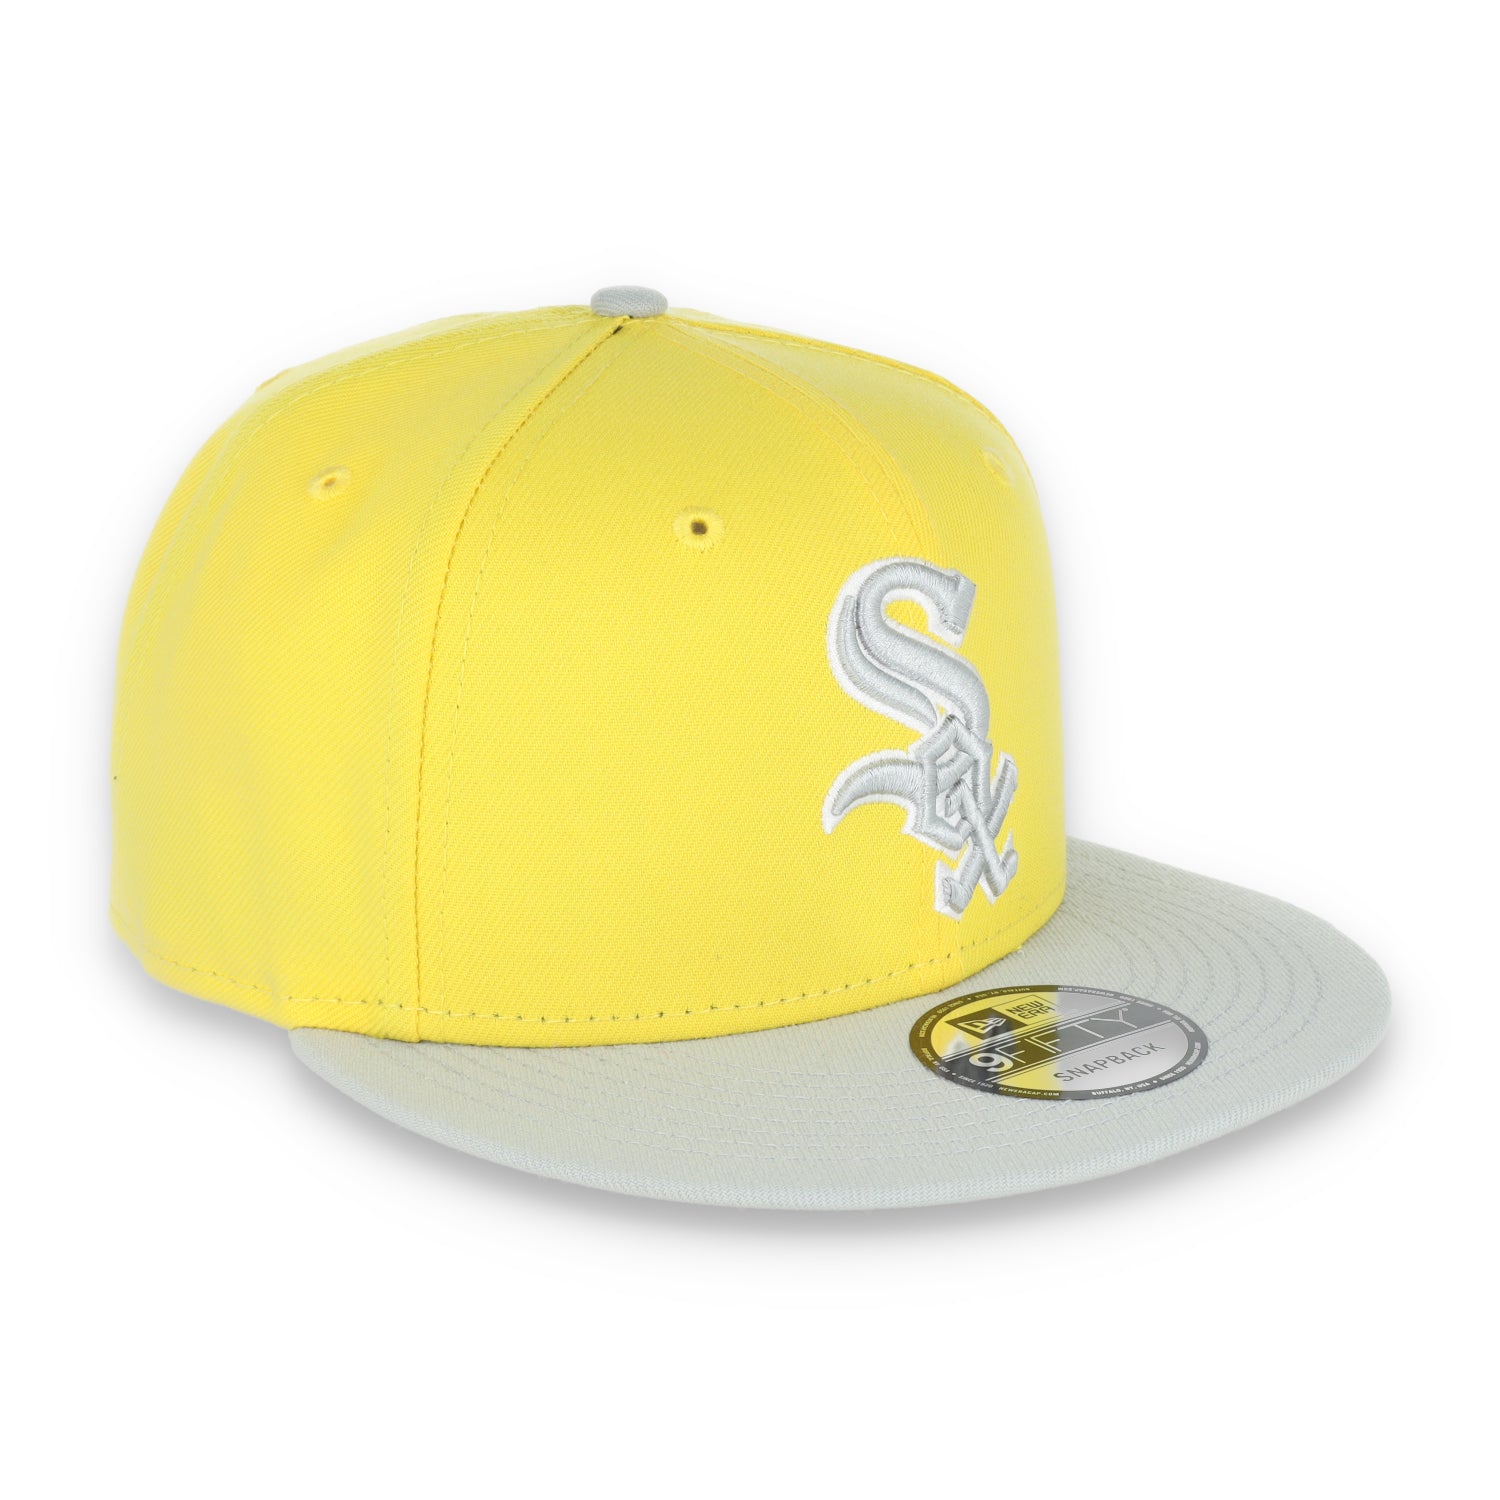 New Era White Sox Two-Tone 9FIFTY Snapback Hat-Grey/Yellow